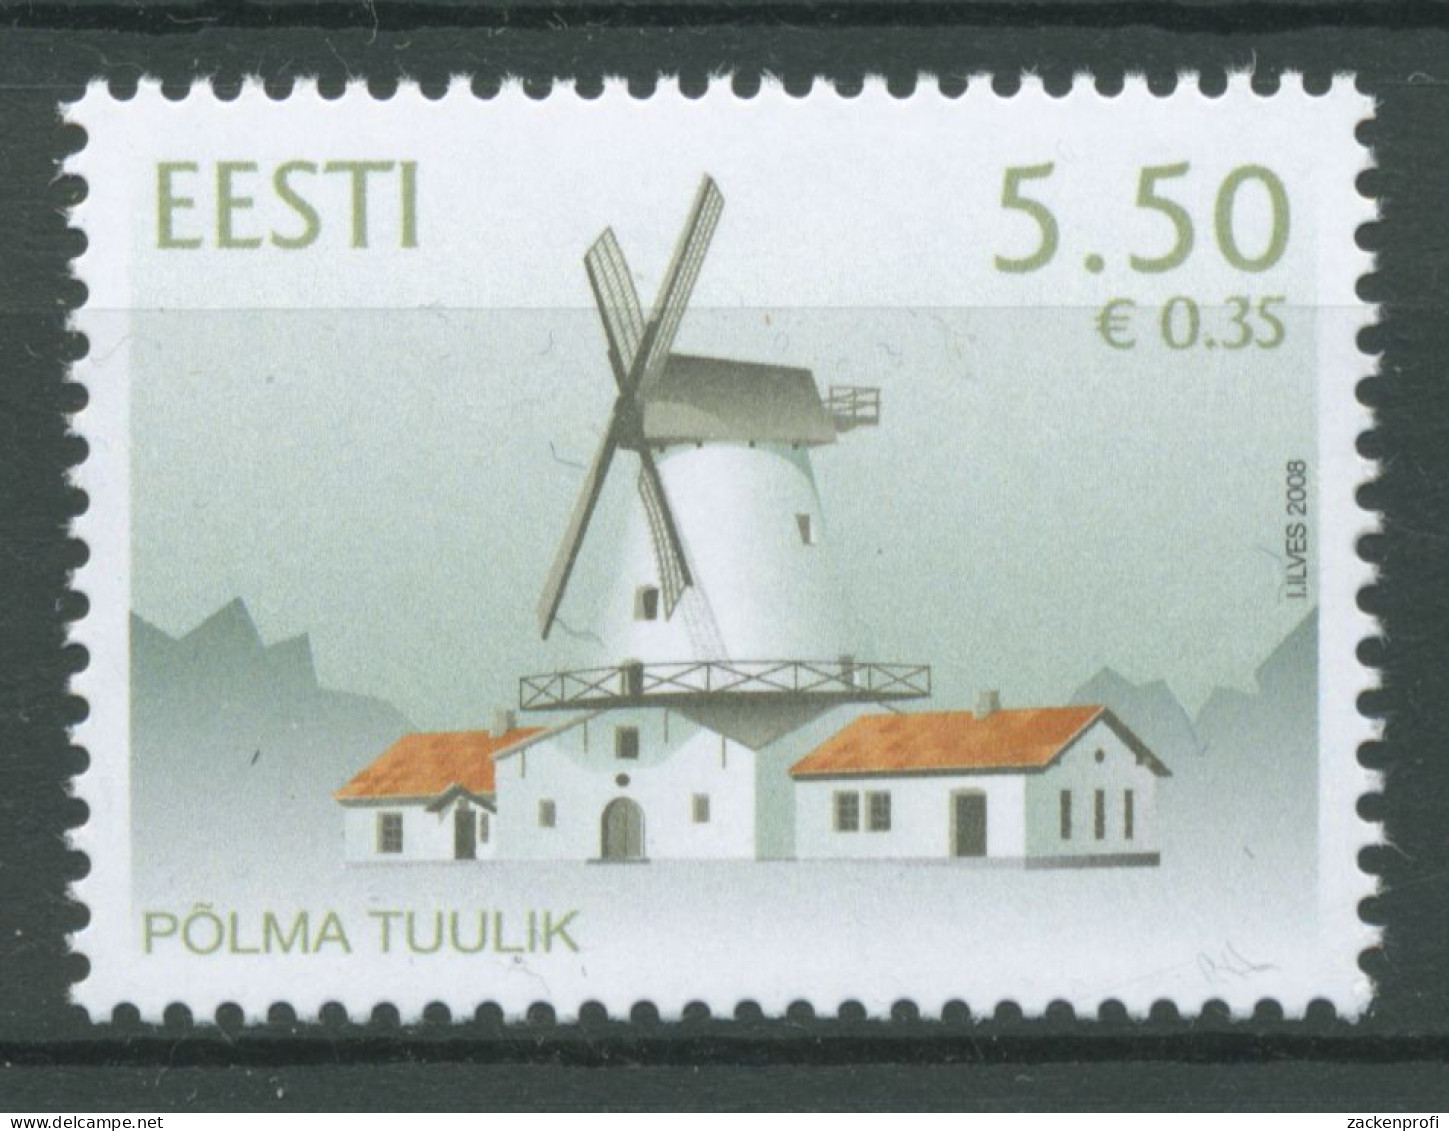 Estland 2008 Windmühle Polma 621 Postfrisch - Estonia